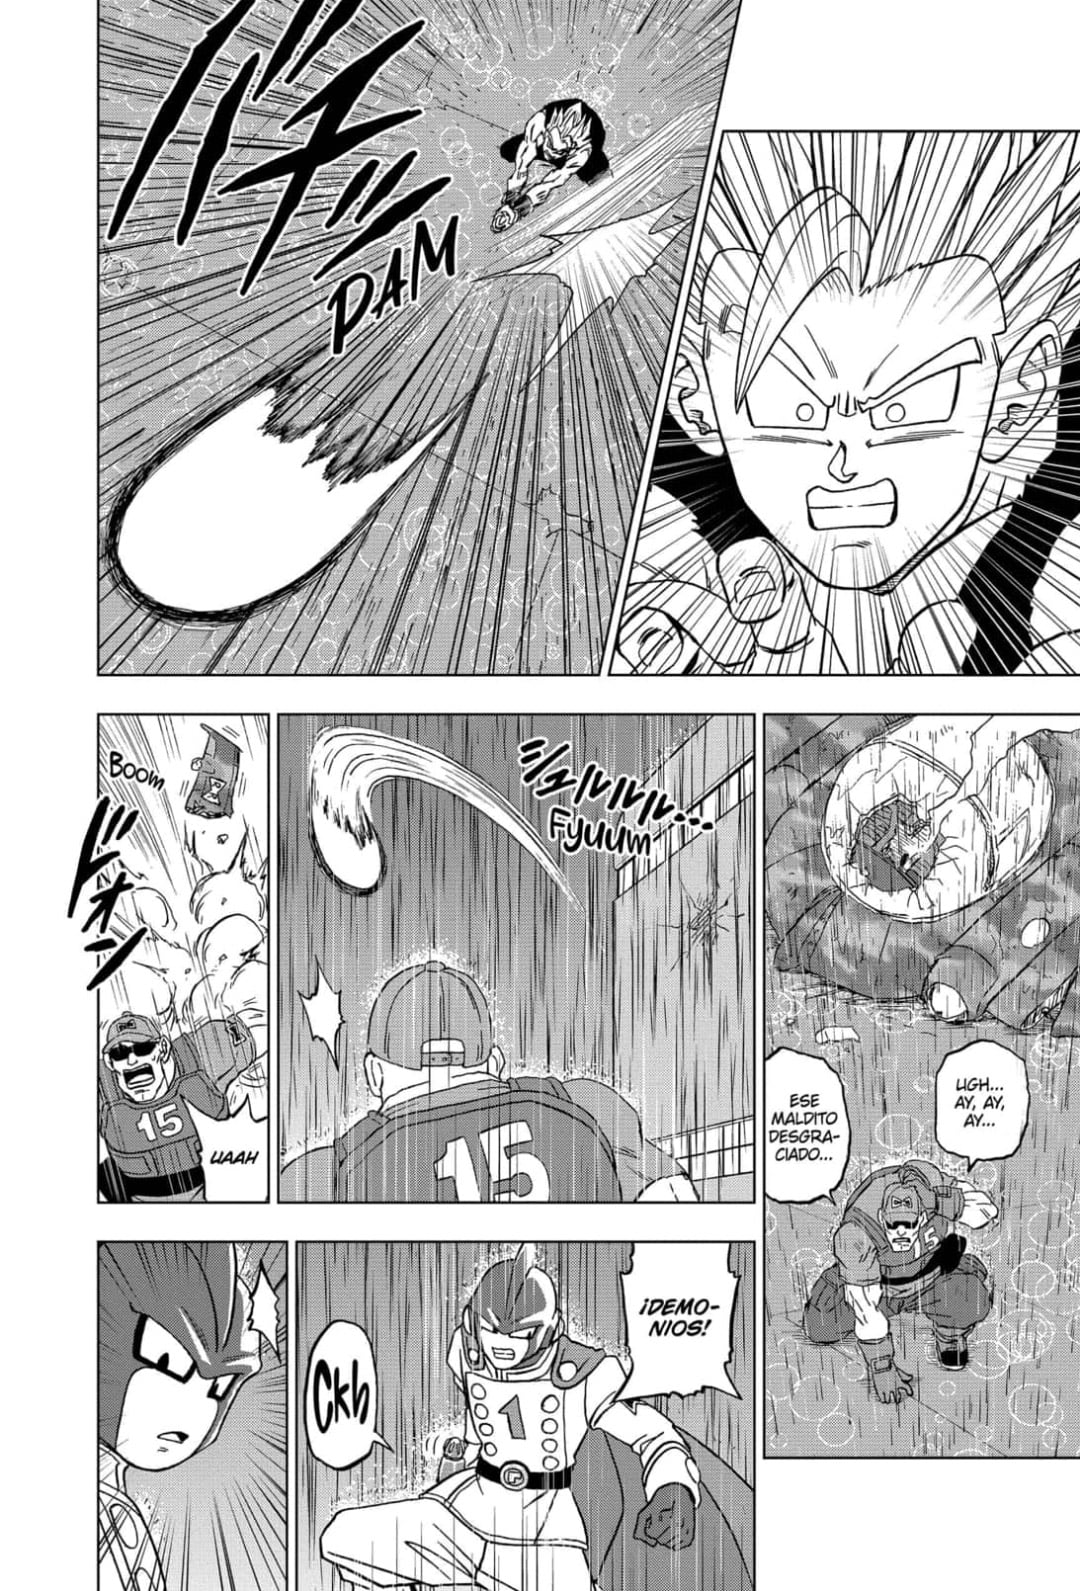 Manga 94 Dragon Ball Super completo en español